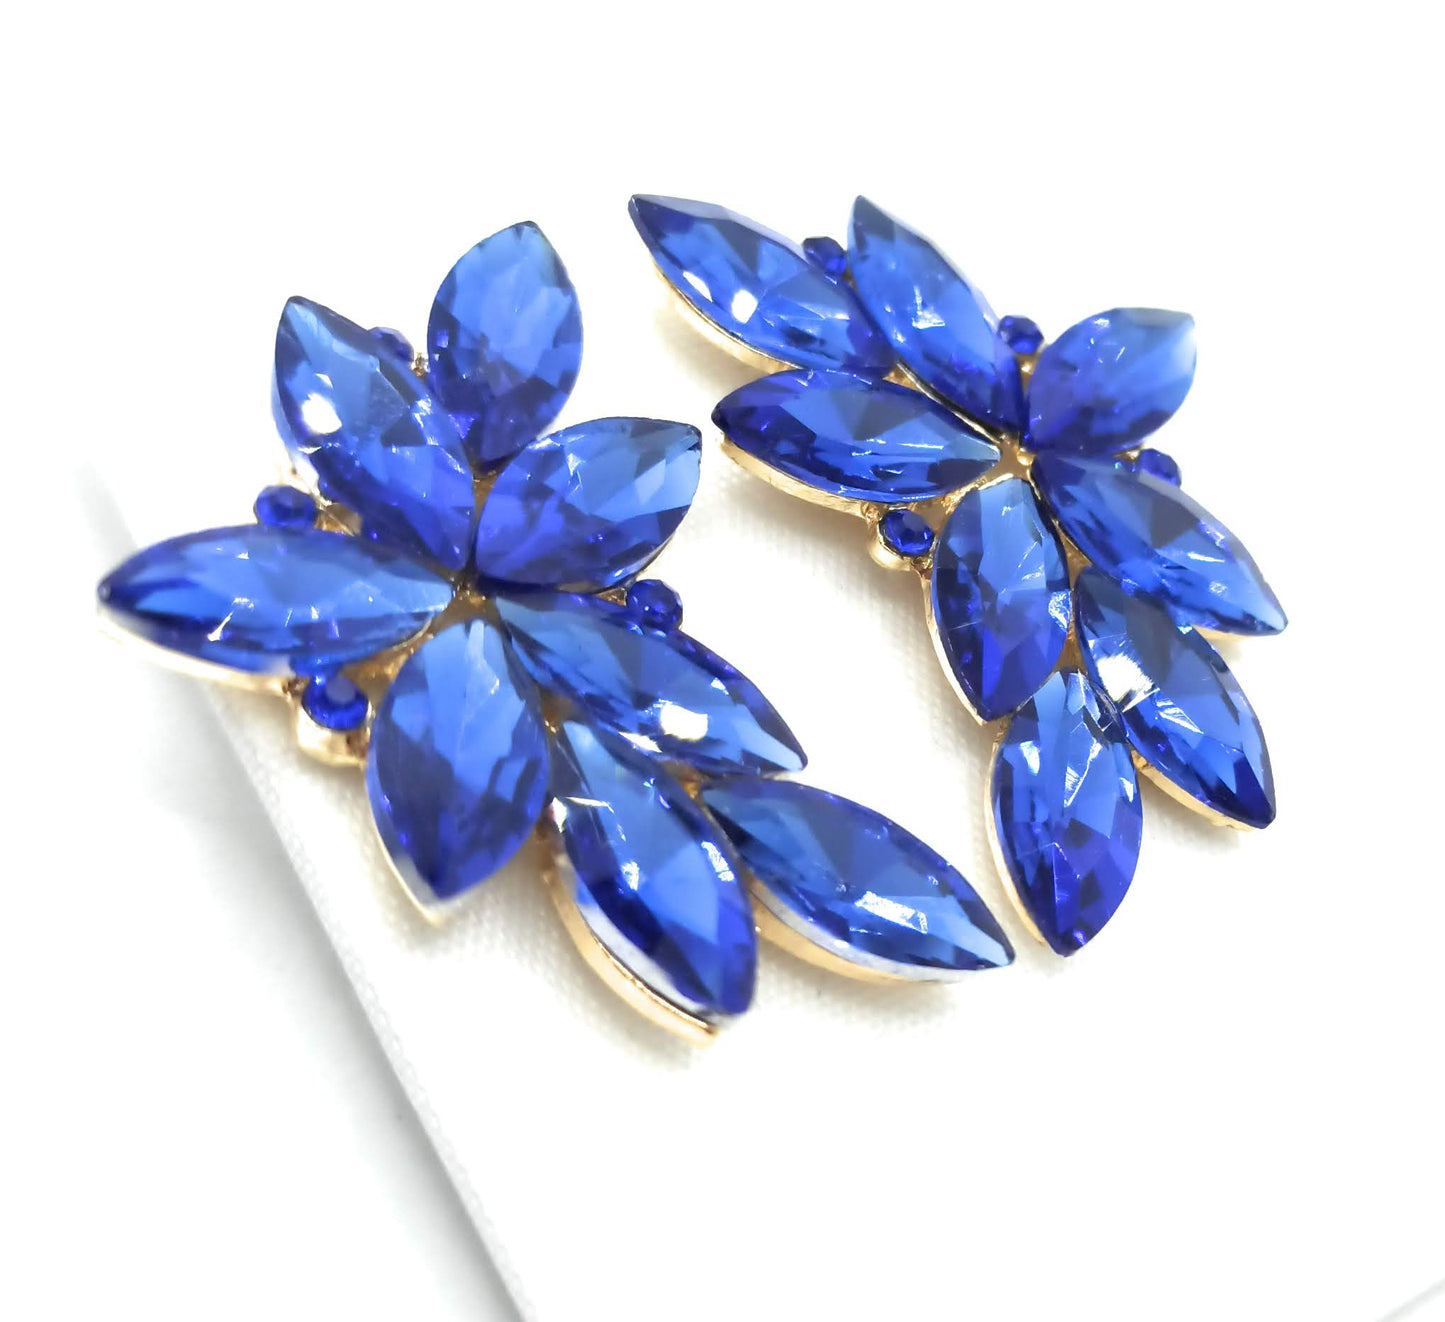 Pendientes Espectaculares Florales · Cristales Azul Zafiro, Oro